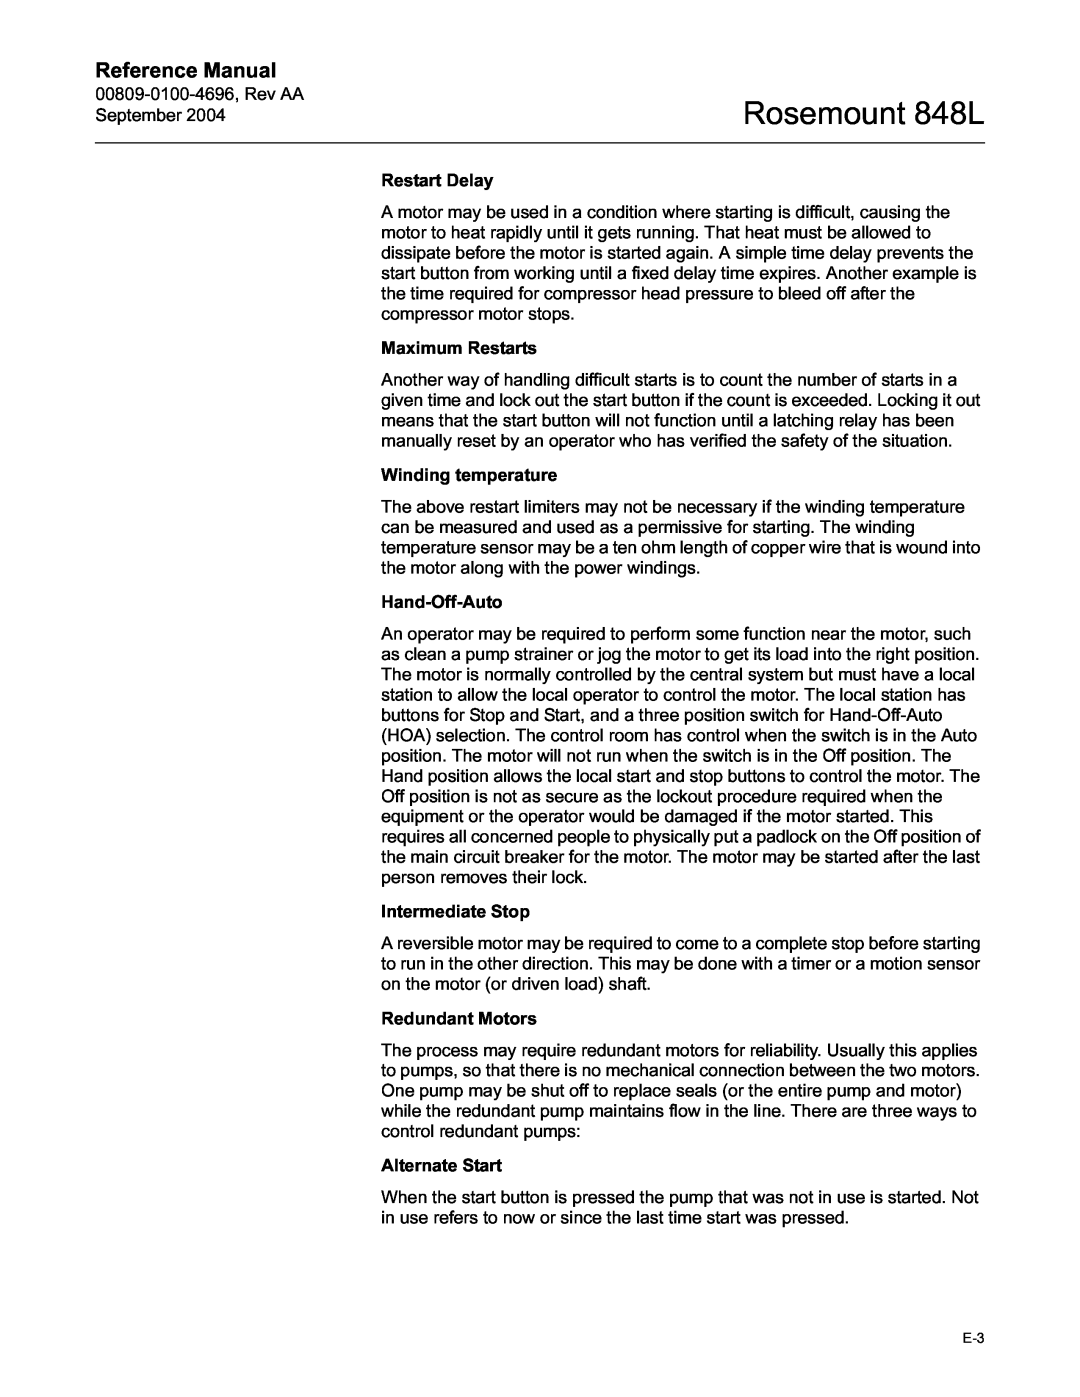 Emerson manual Rosemount 848L, Reference Manual, 00809-0100-4696,Rev AA September 